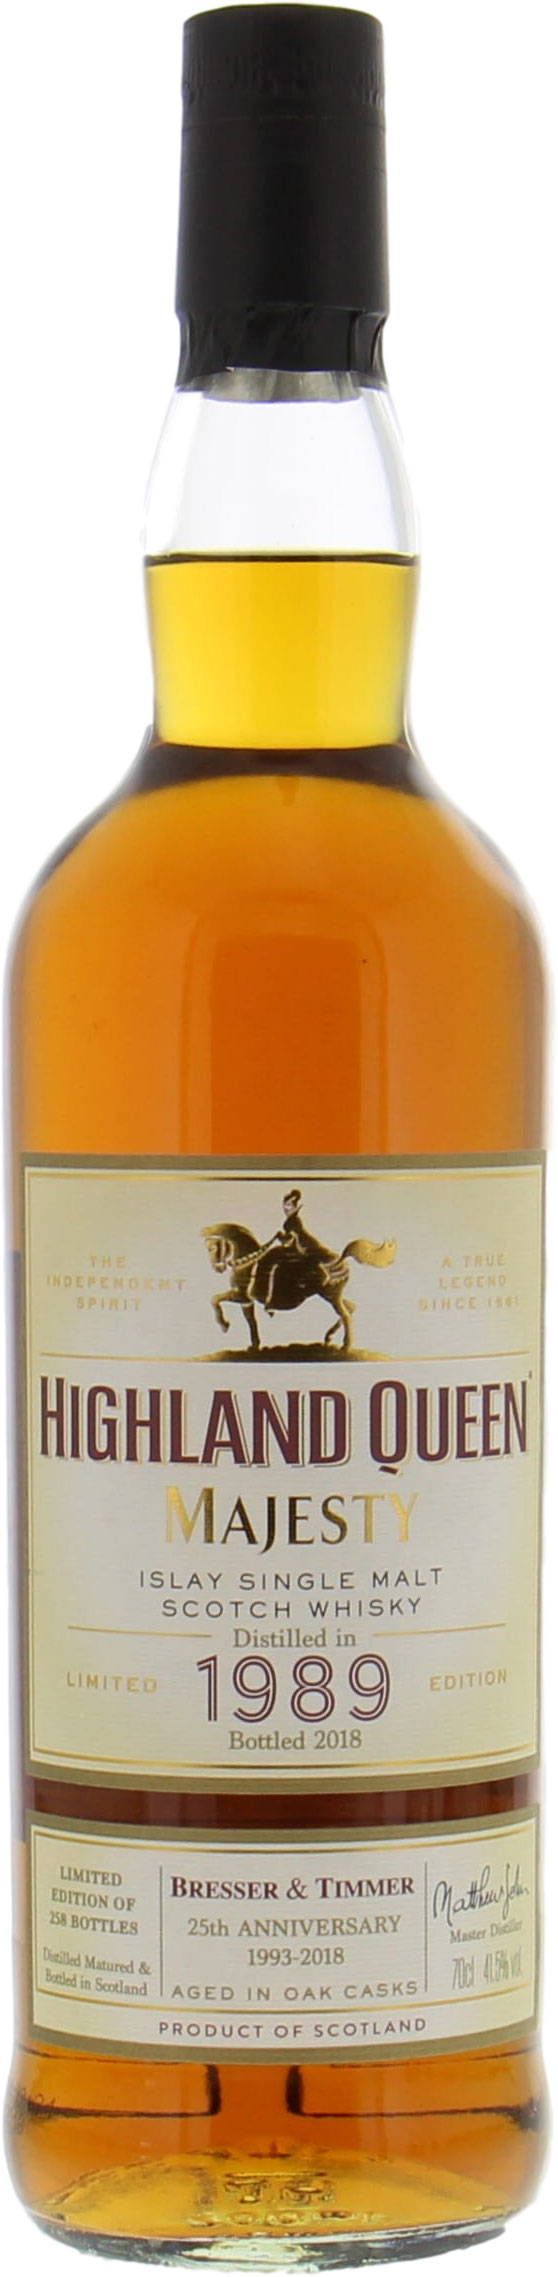 Bunnahabhain - Highland Queen 1989 Islay Single Malt For Bresser & Timmer 41.5% 1989 Perfect